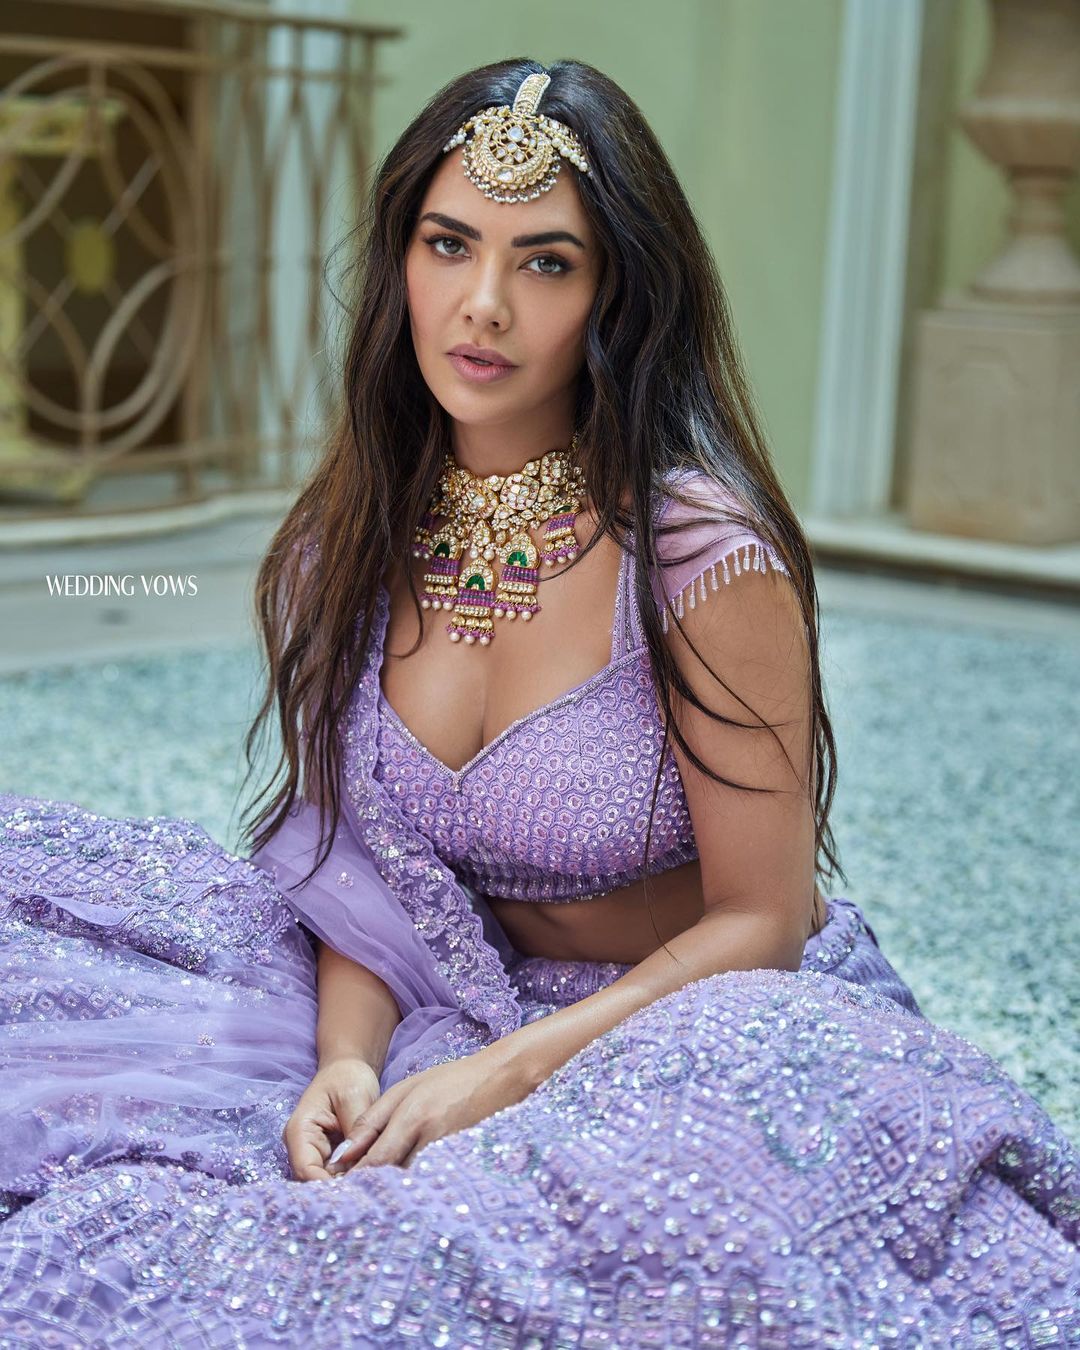 Esha Gupta gives princess vibes in the lilac coloured choli